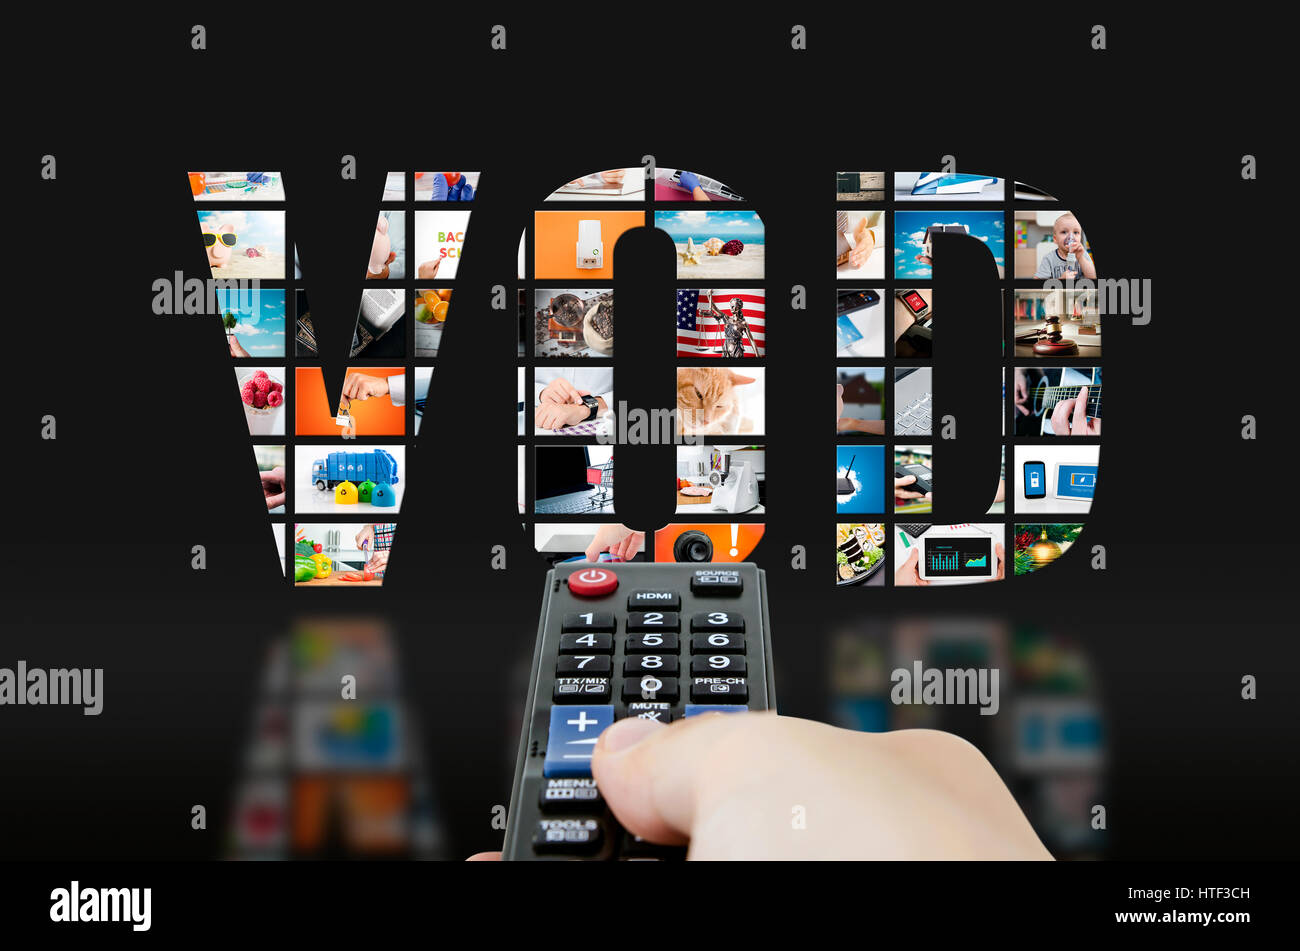 video on demand in multimedia